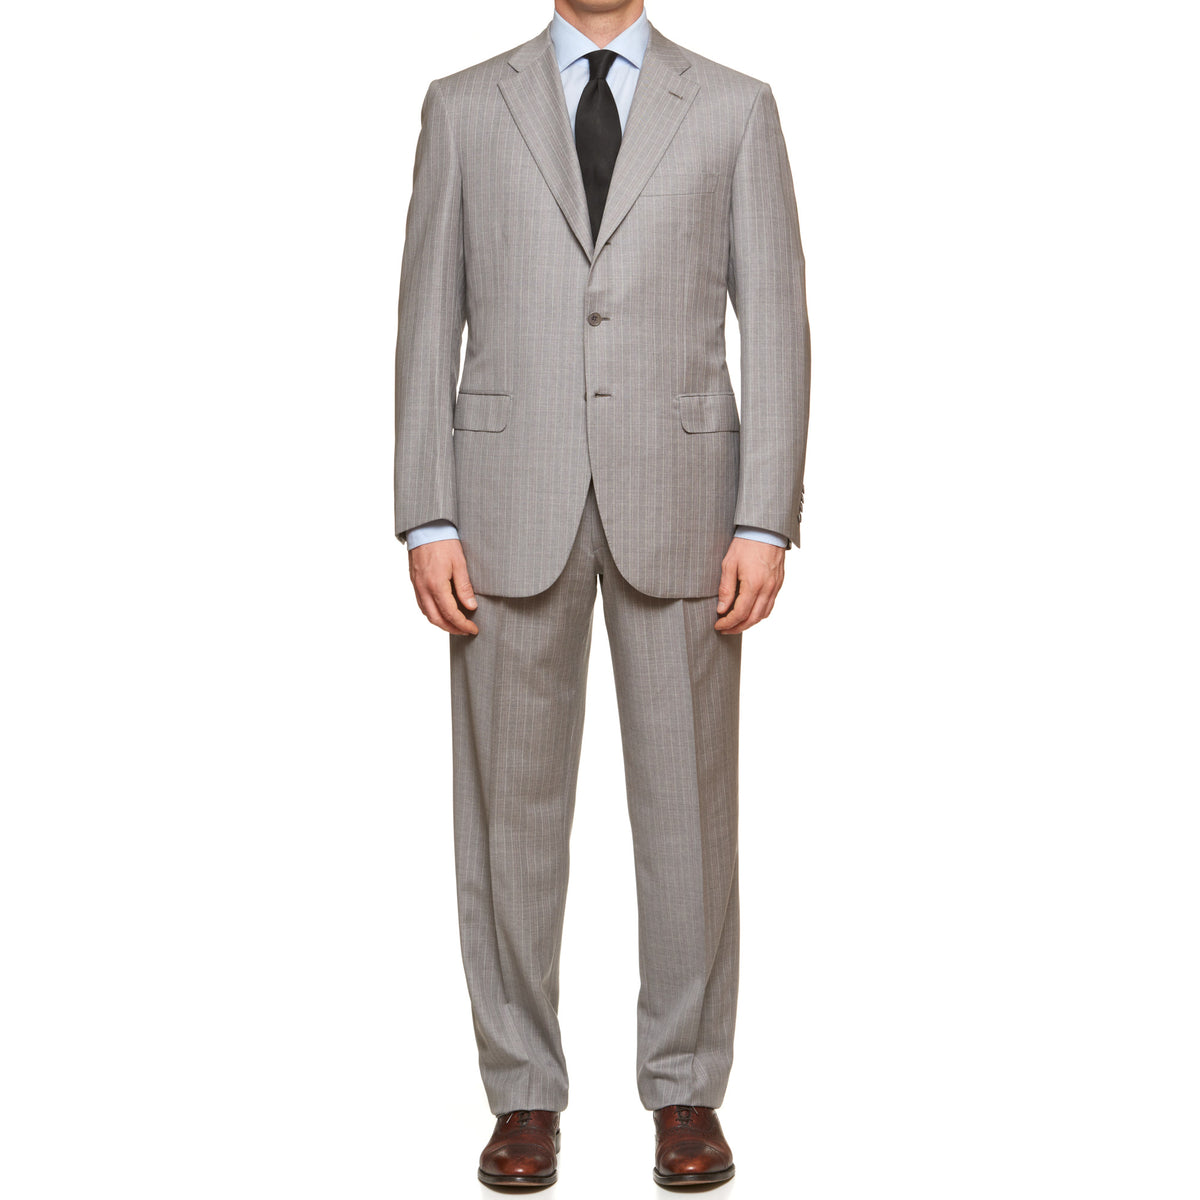 BRIONI "CHIGI" Handmade Gray Striped Wool Suit EU 52 NEW US 42